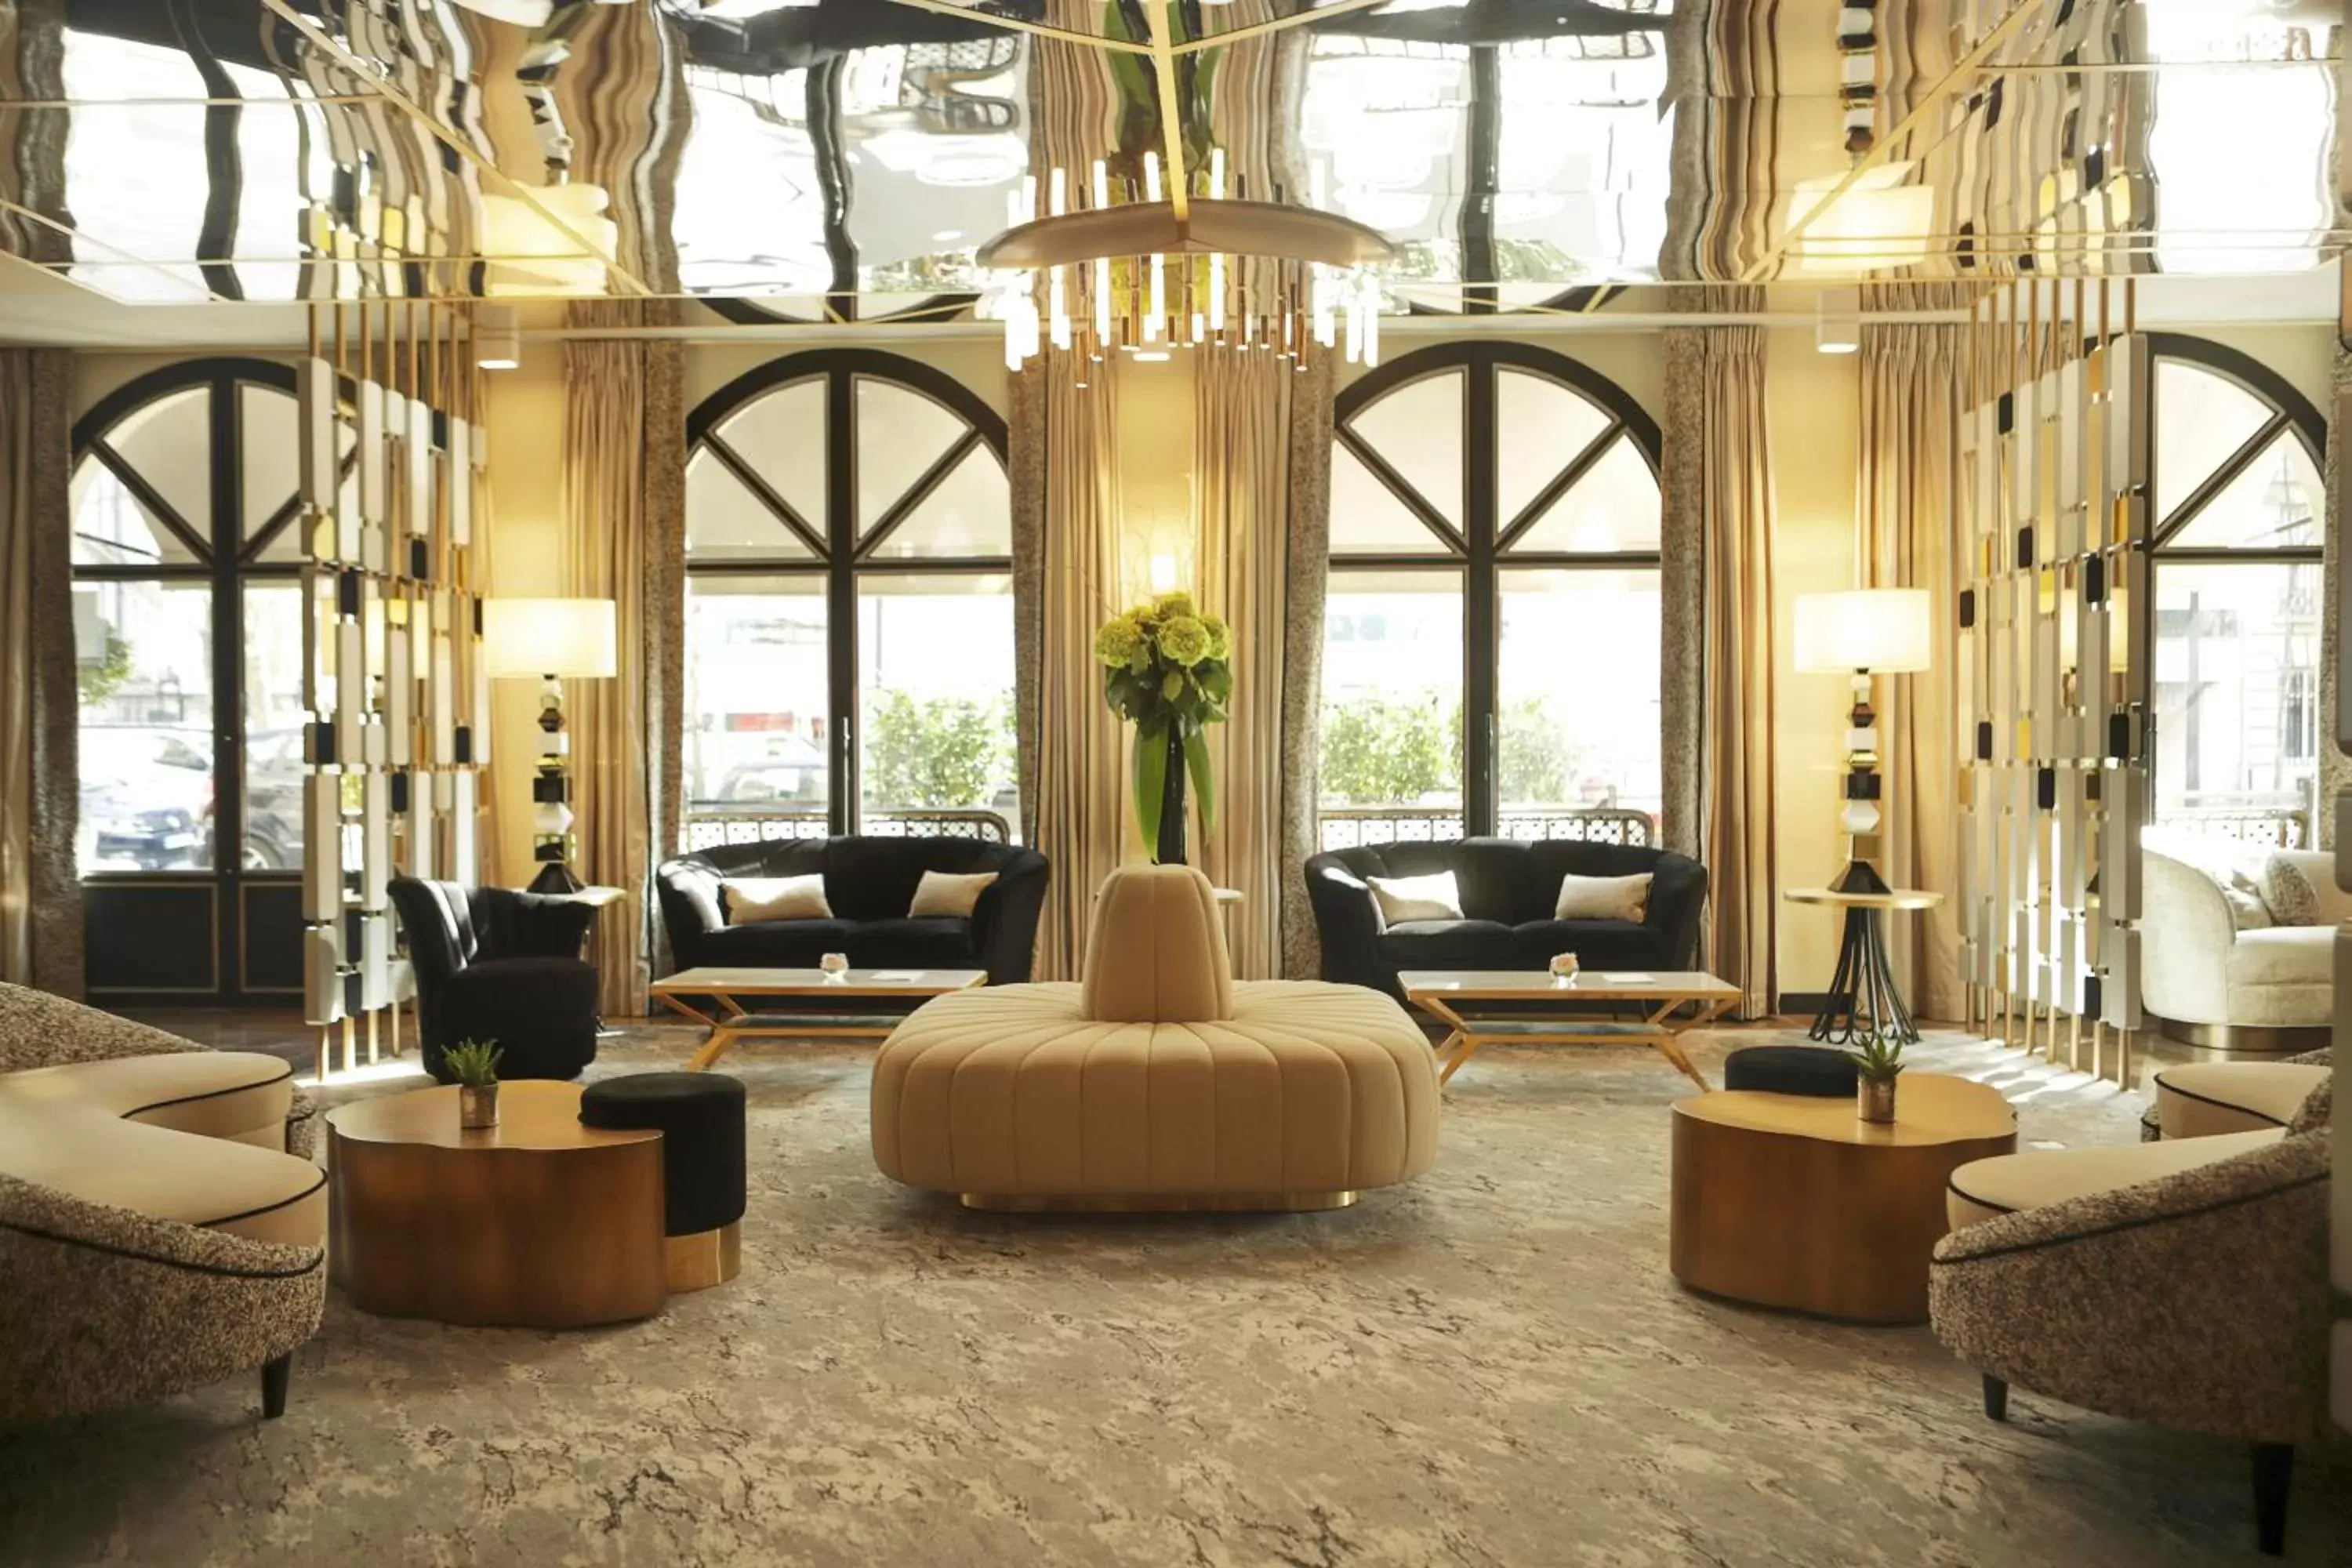 Lobby or reception in Hôtel le Derby Alma by Inwood Hotels